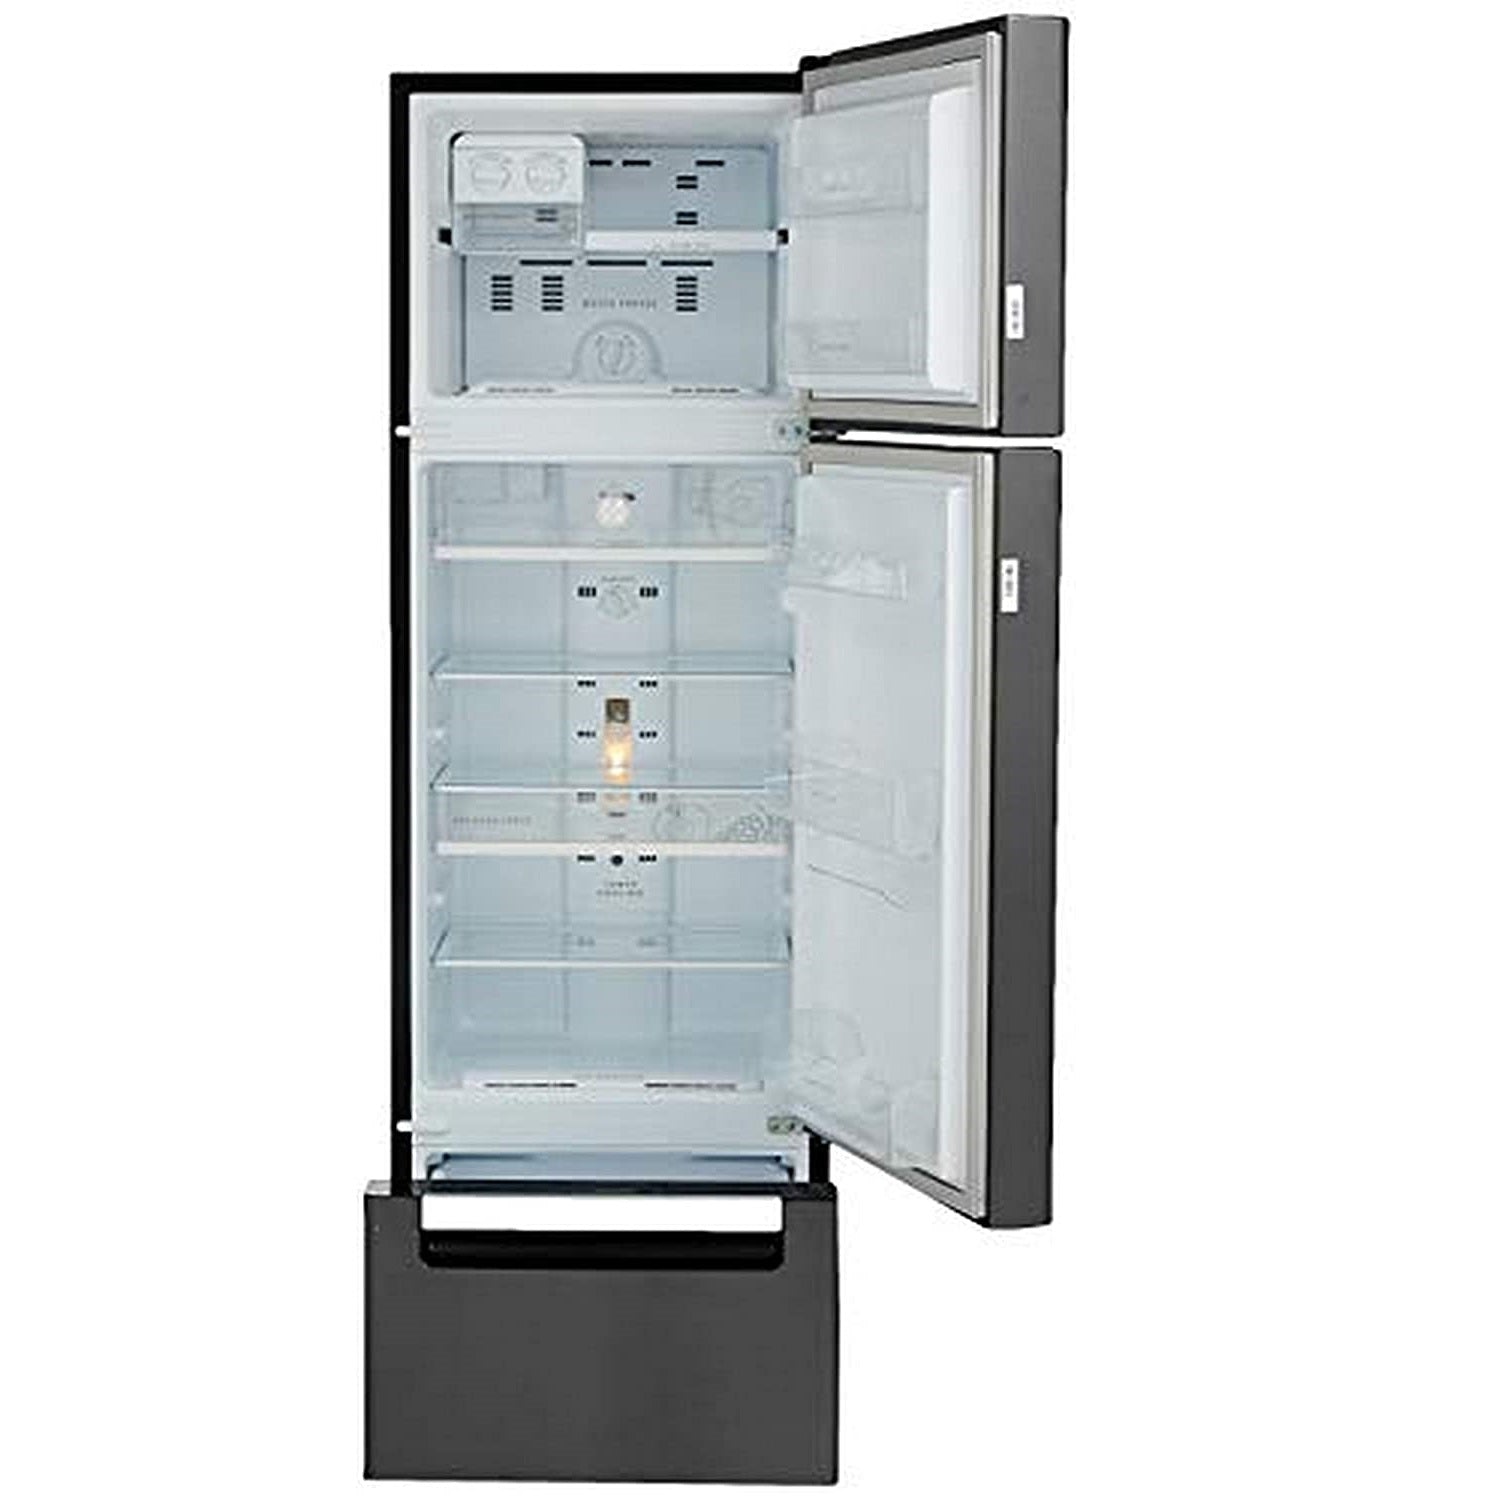 Whirlpool Frost-free Refrigerator FP 343D Proton Roy (N), Steel Onyx (21147)